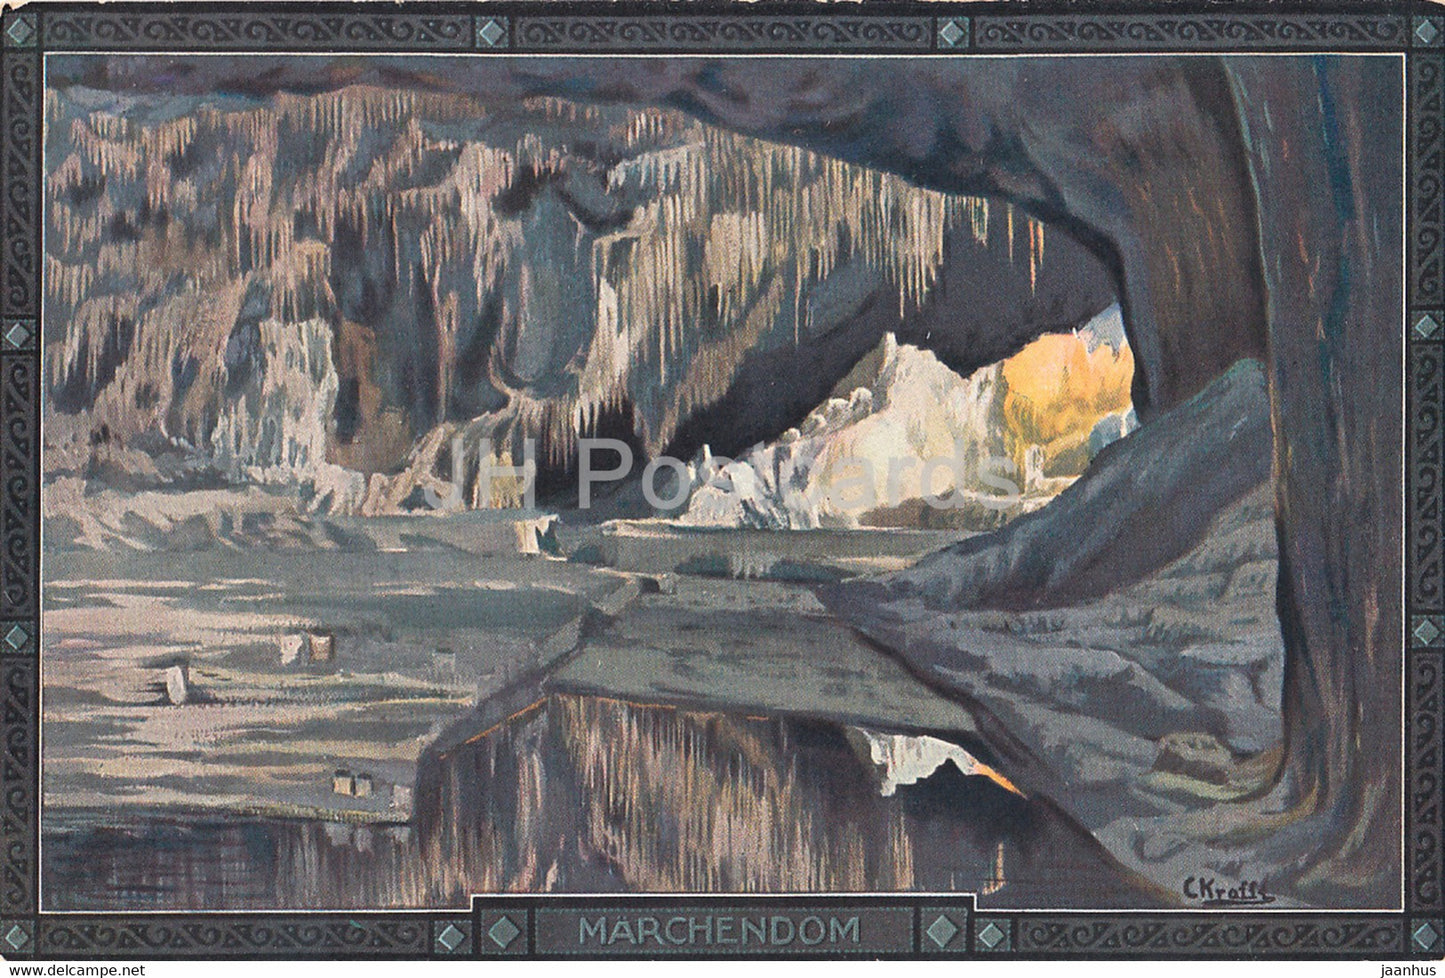 Feengrotten von Saalfeld in Th - Marchendom - cave - 1 - old postcard - Germany - unused - JH Postcards